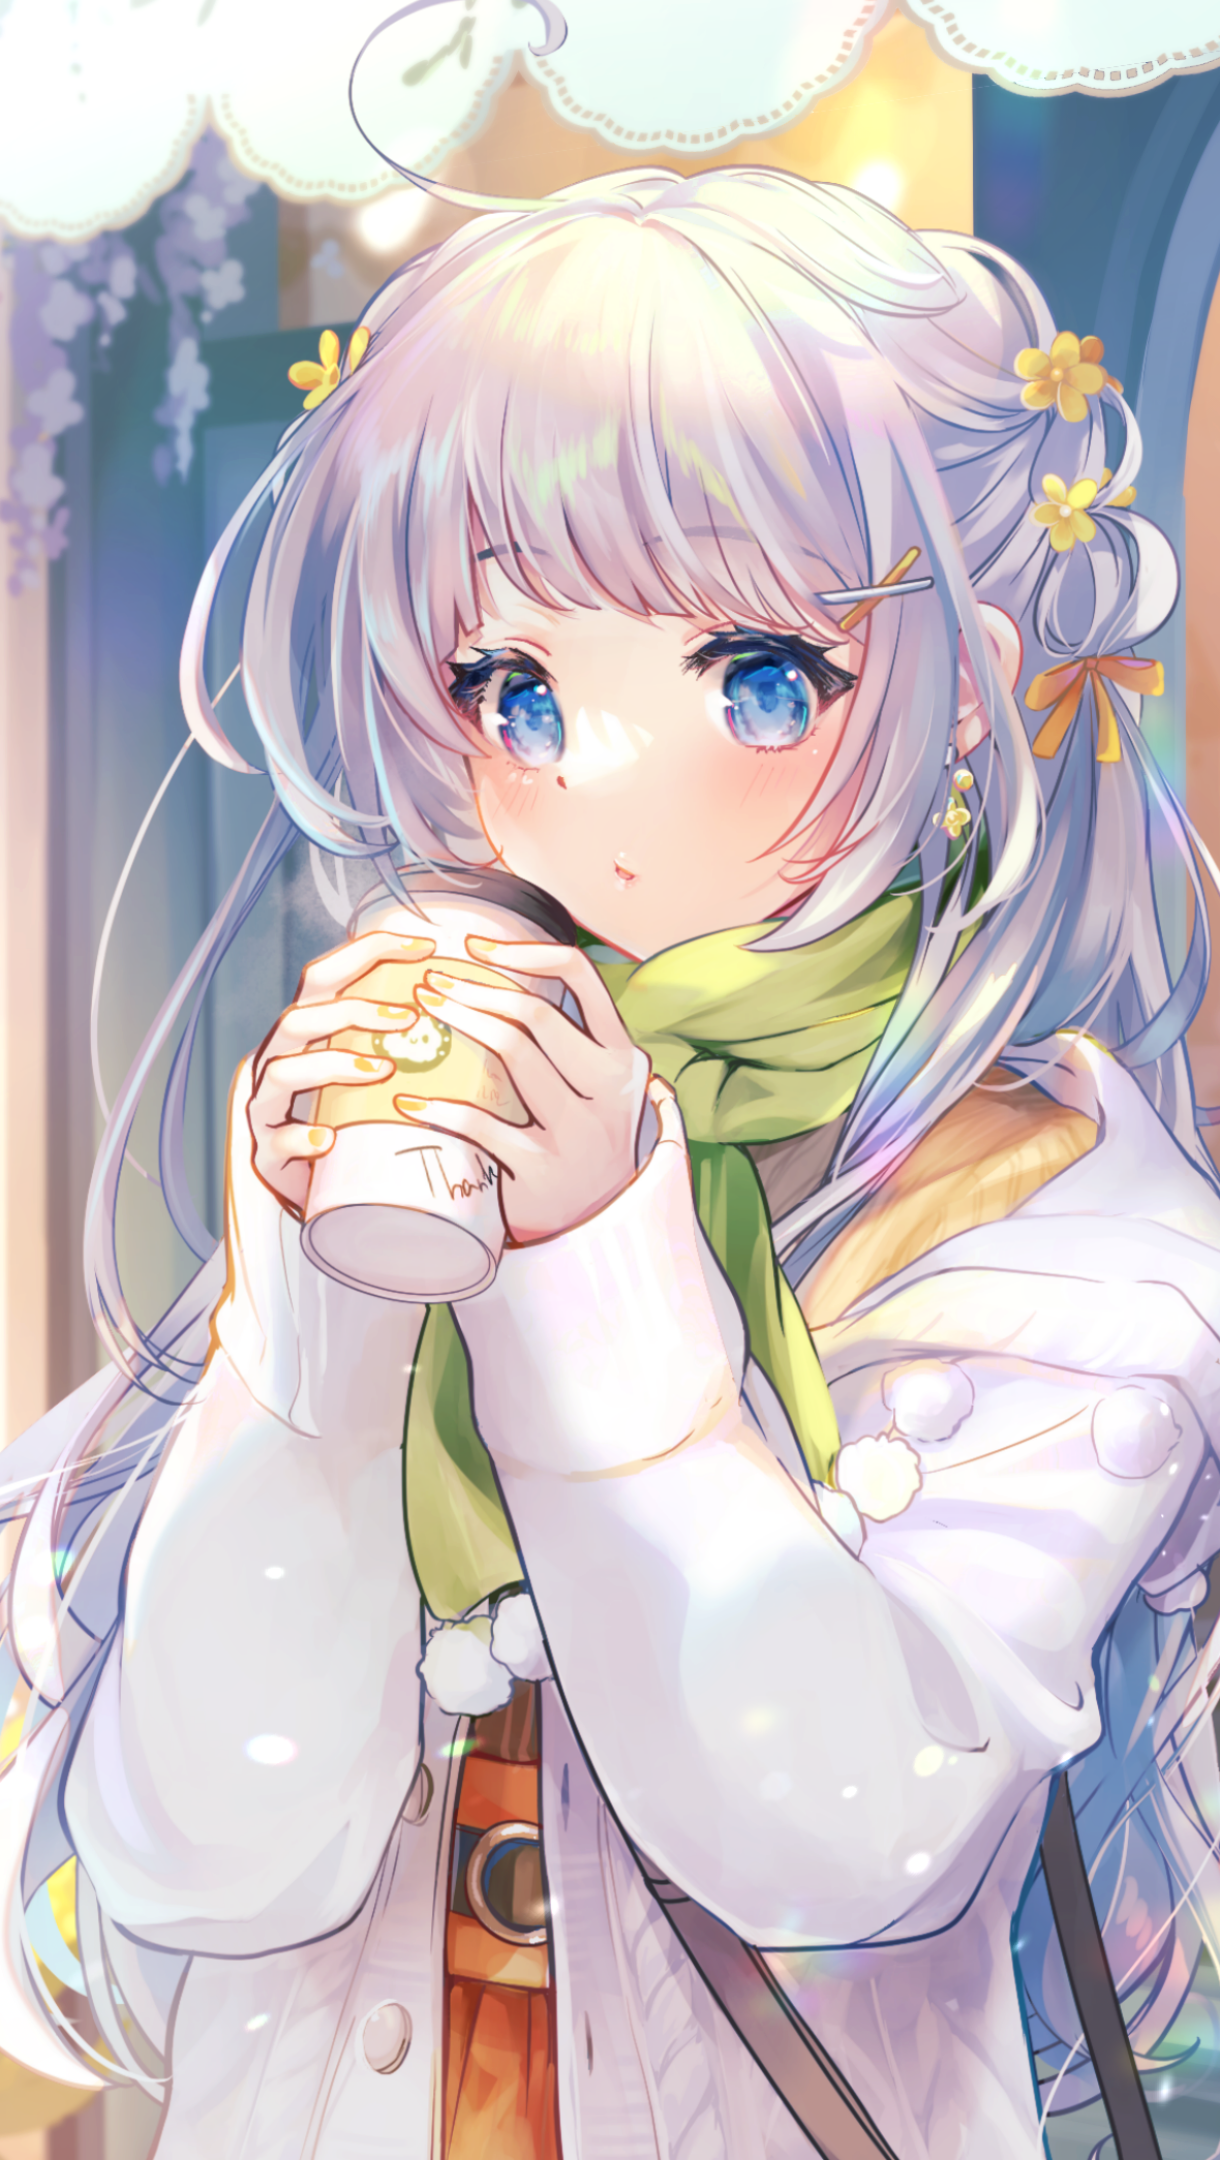 Girl in Winter Coat - Anime Cute Kawaii 